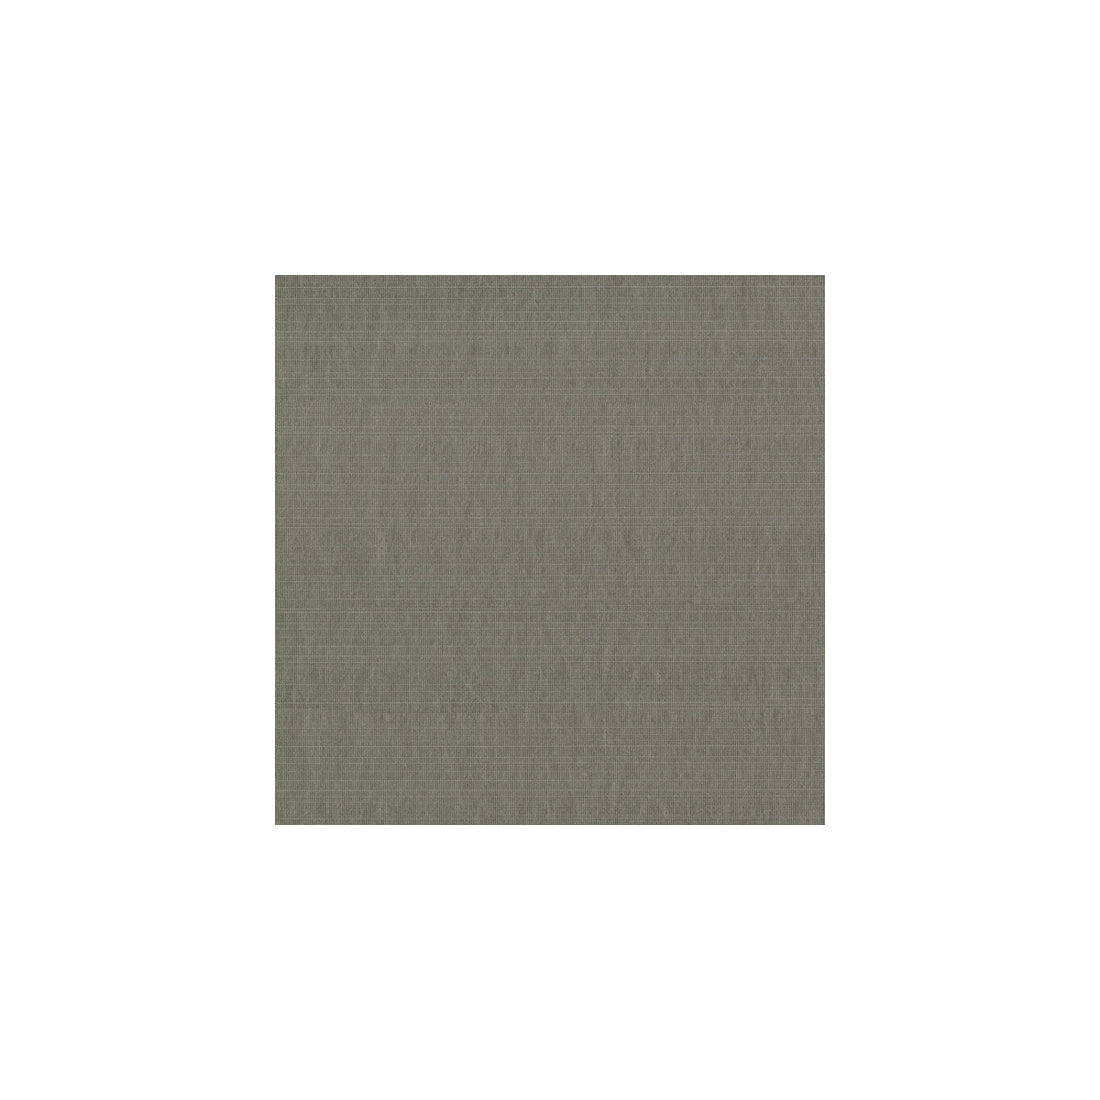 Kravet Basics fabric in 3697-11 color - pattern 3697.11.0 - by Kravet Basics in the Gis collection